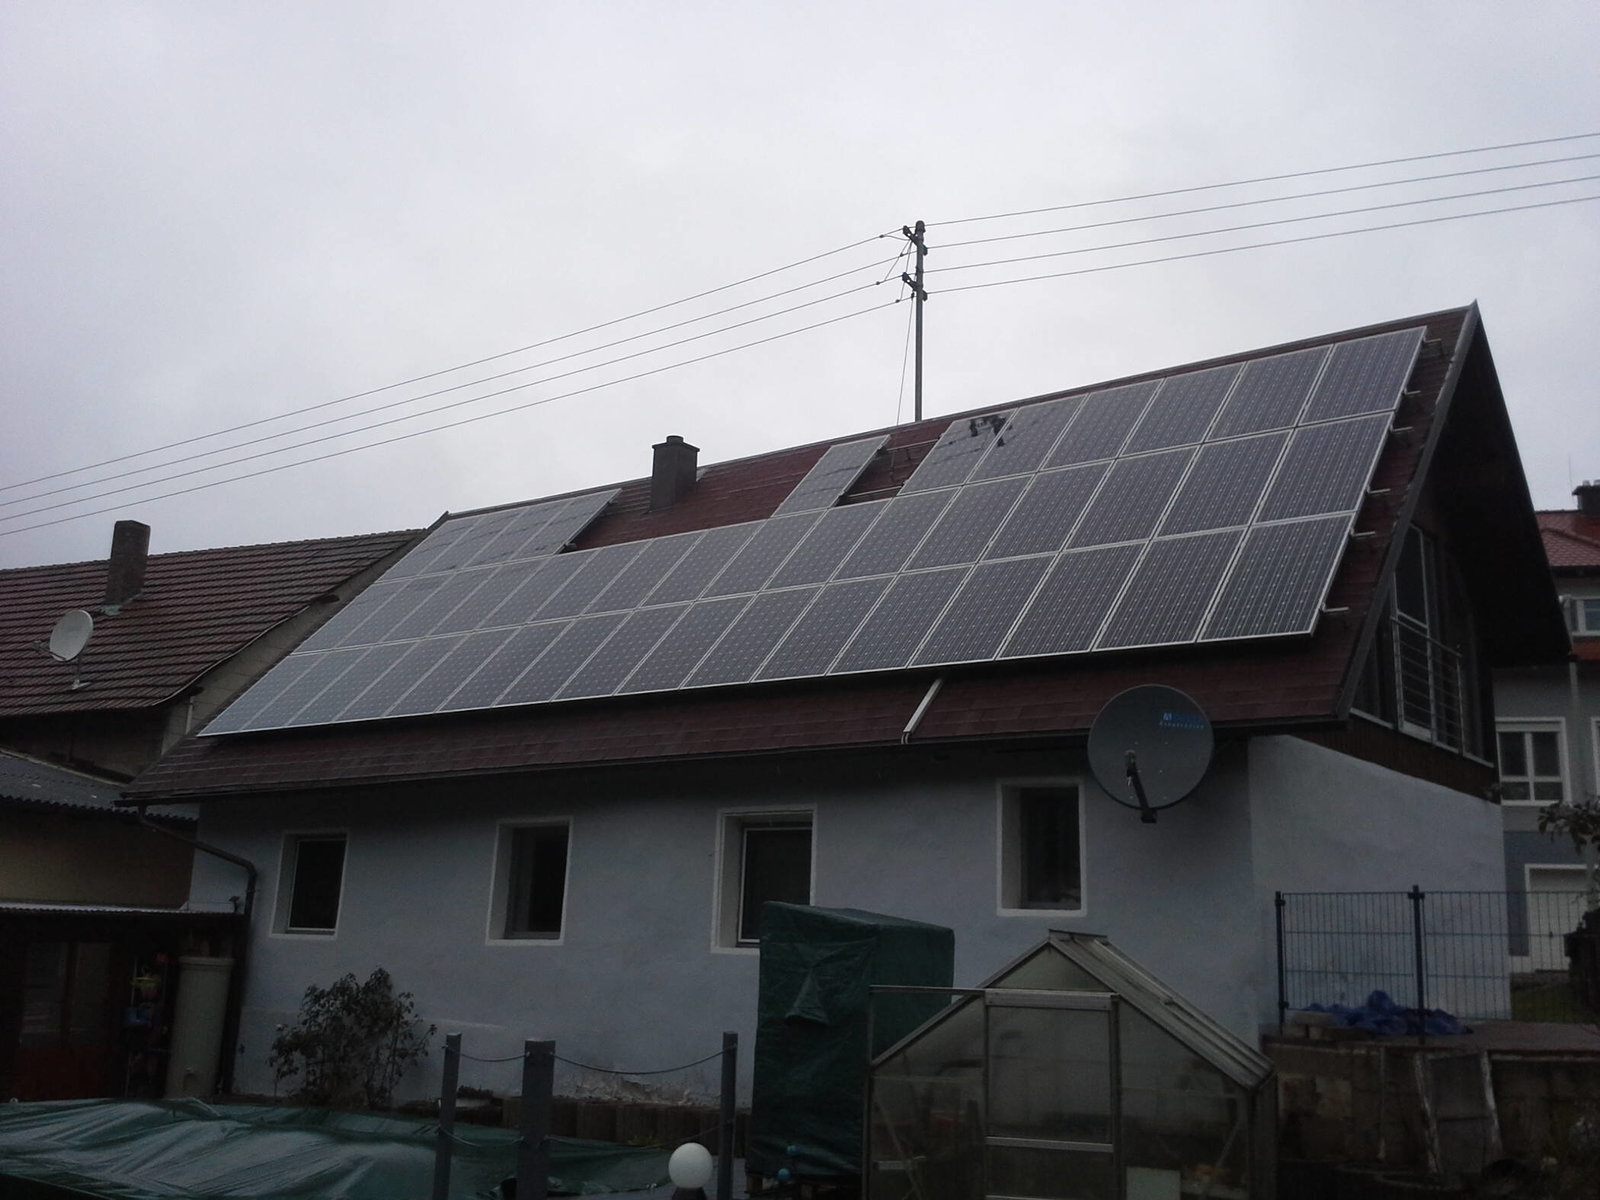 Solar Panele auf Einfamilienhaus